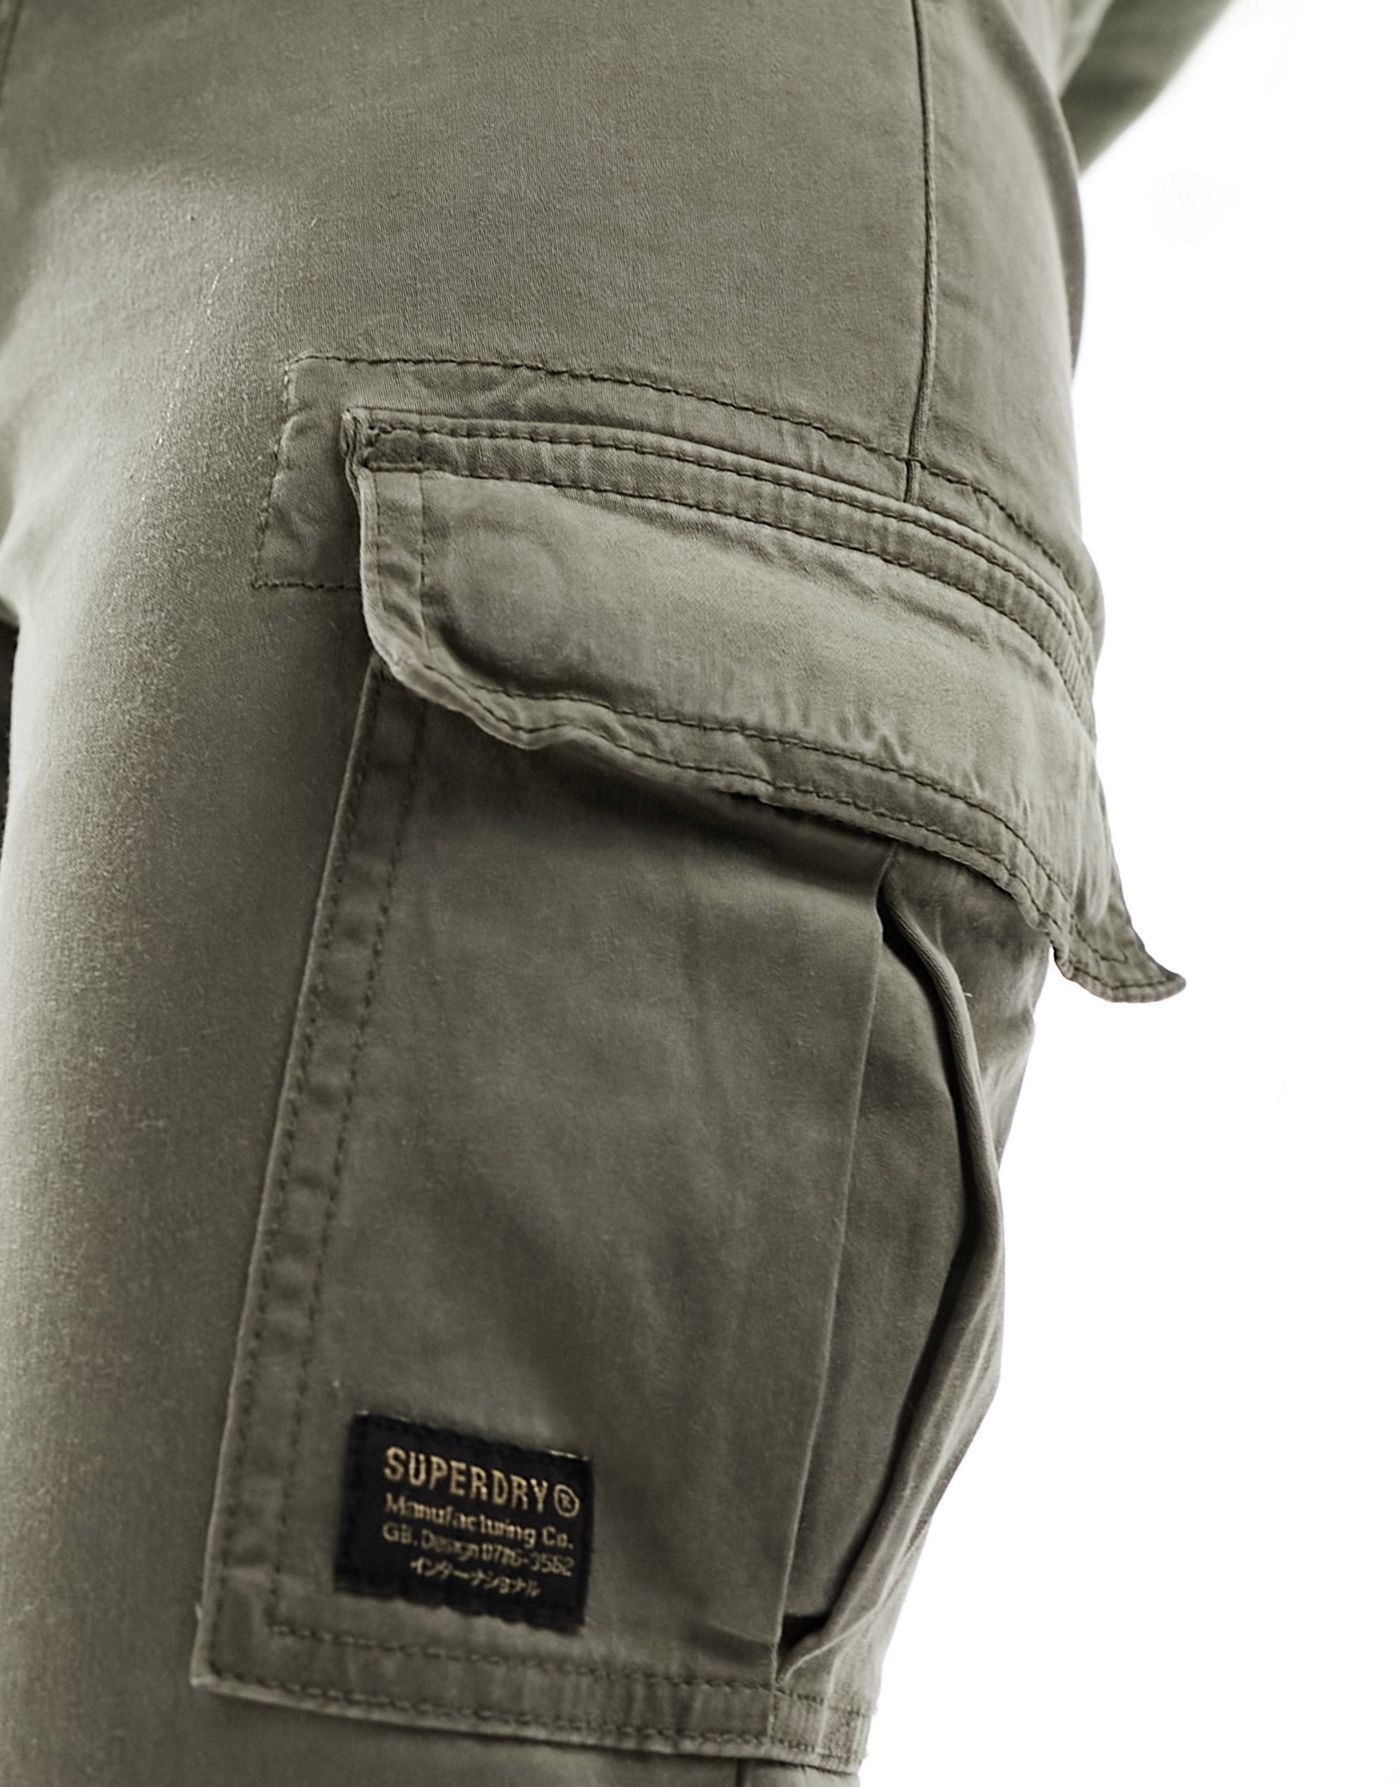 Superdry skinny fit cargo pants in Worn Khaki Green